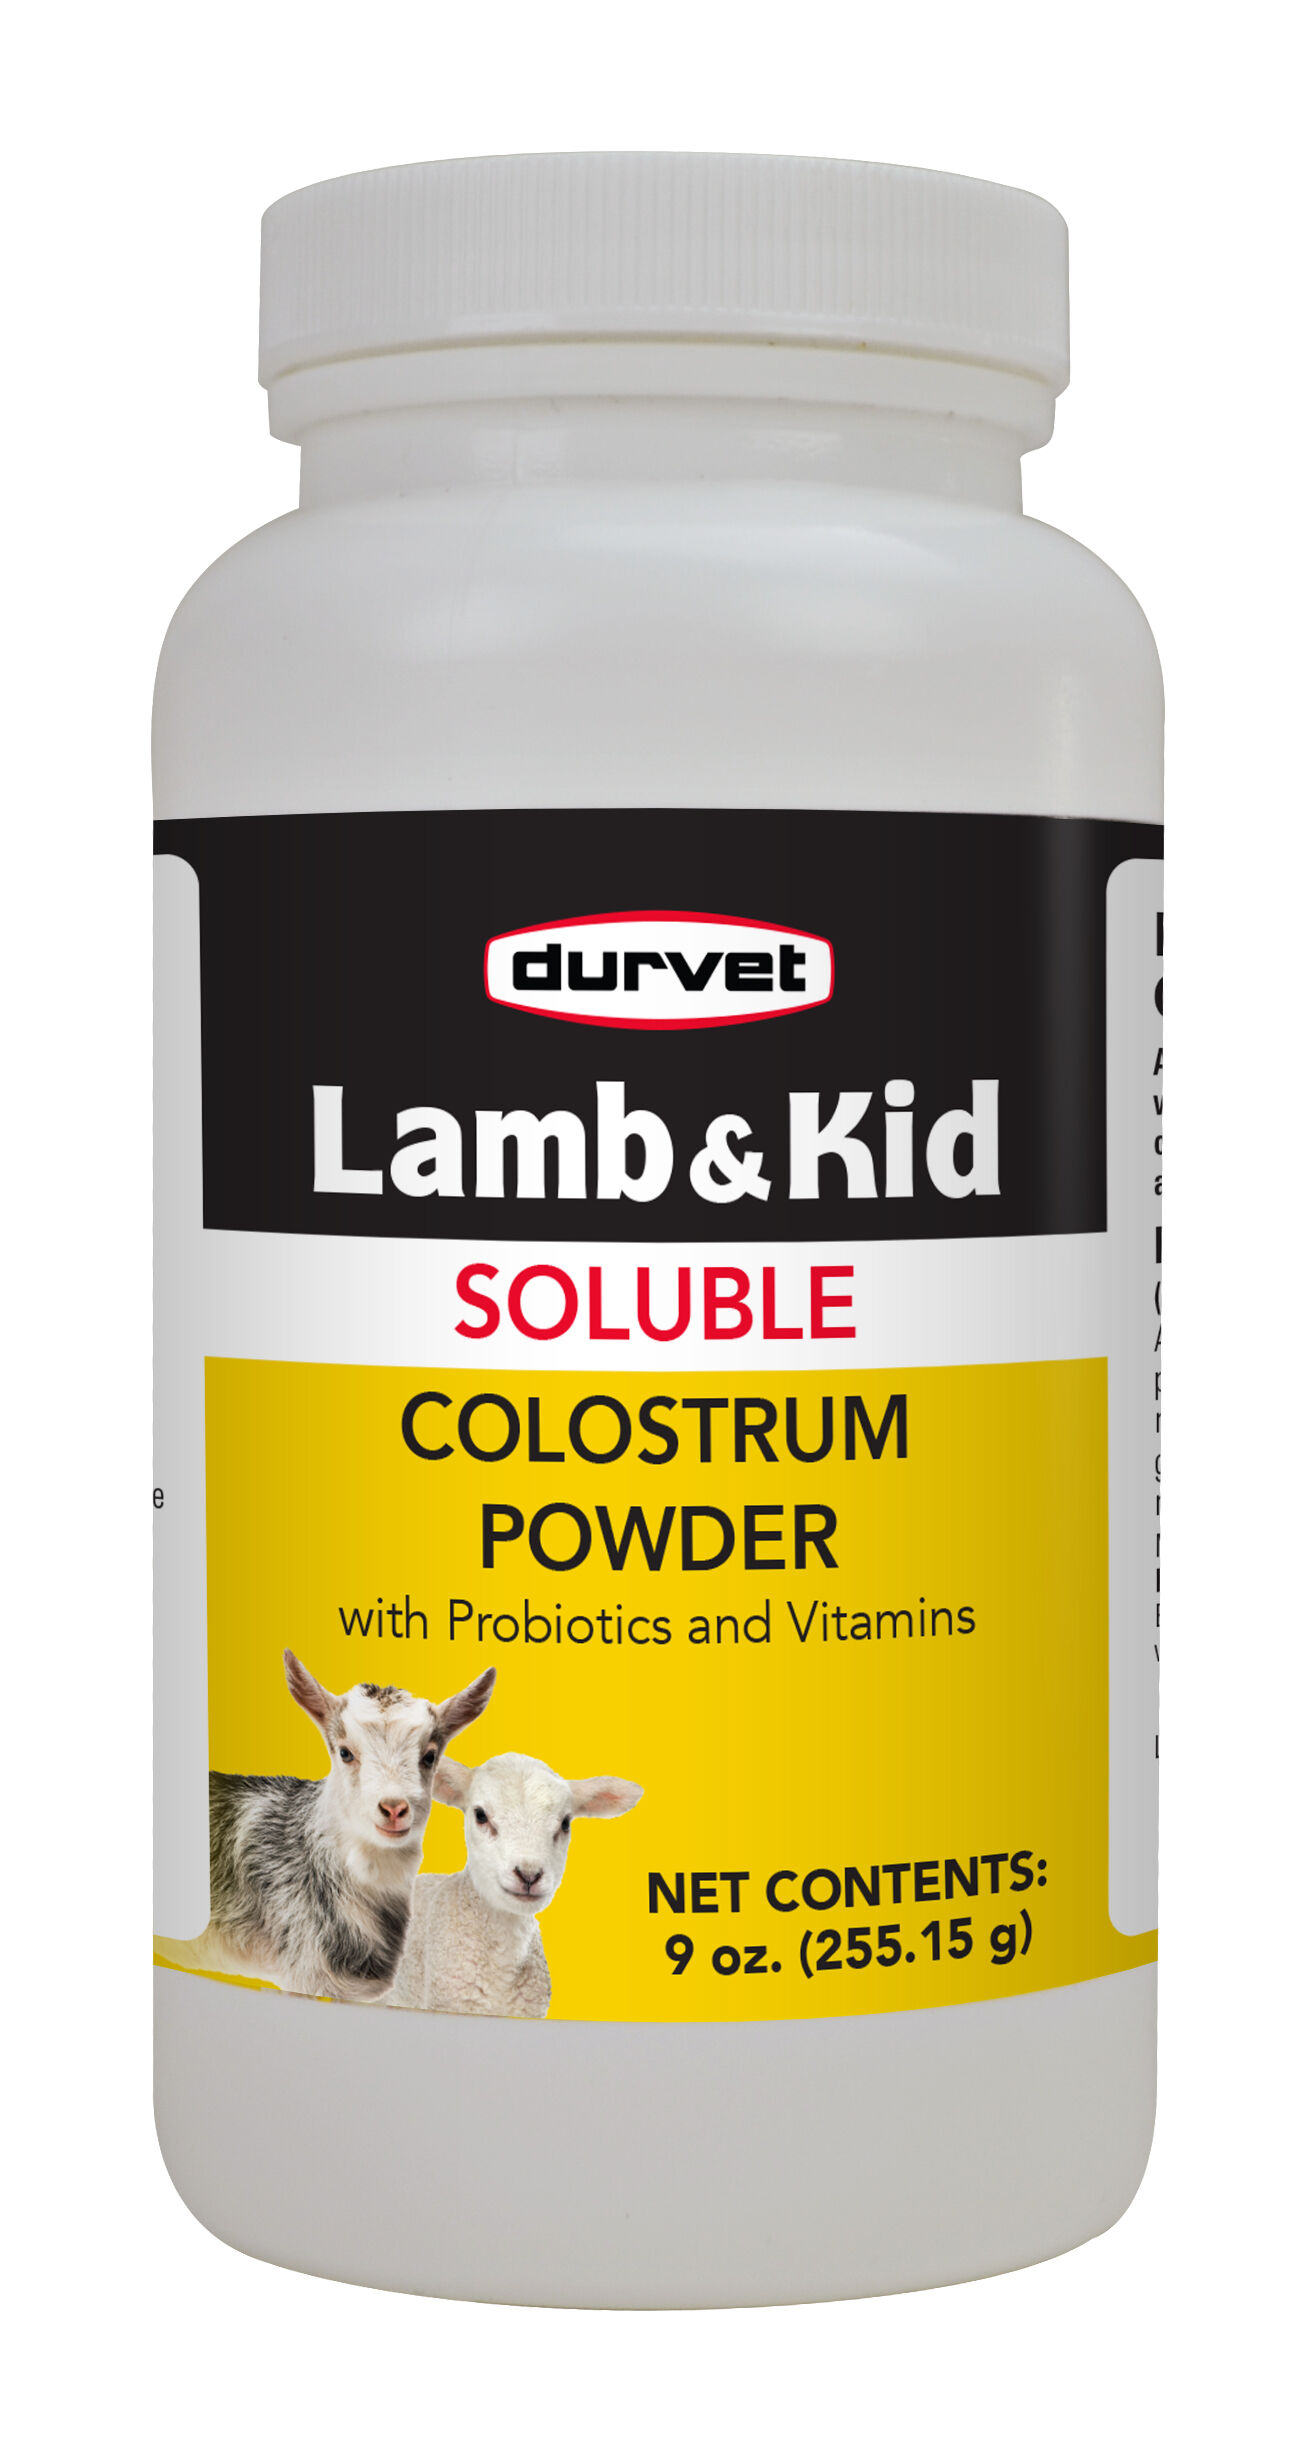 Lamb and Kid Colostrum Powder